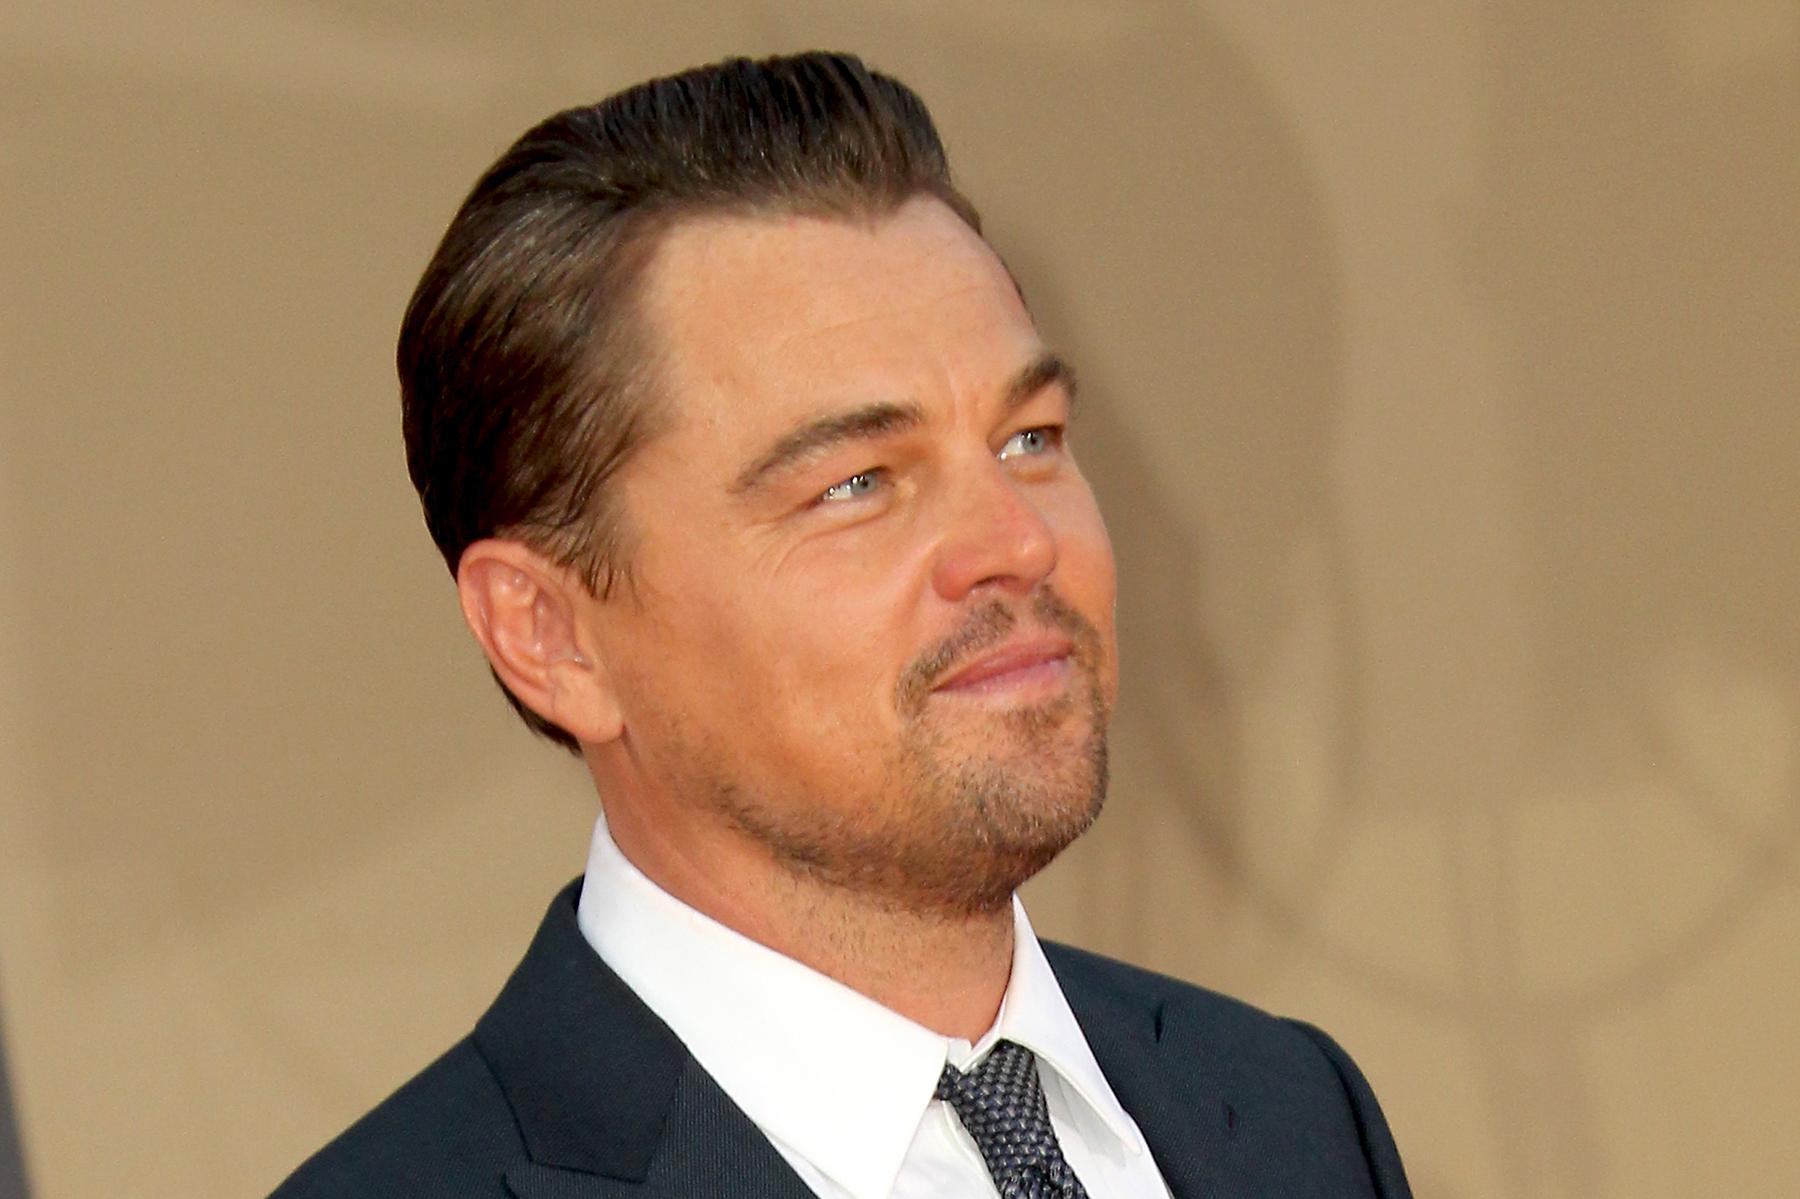 Leonardo DiCaprio applauds Golden Globes for serving plant-based meal at 2020 awards - www.hollywood.com